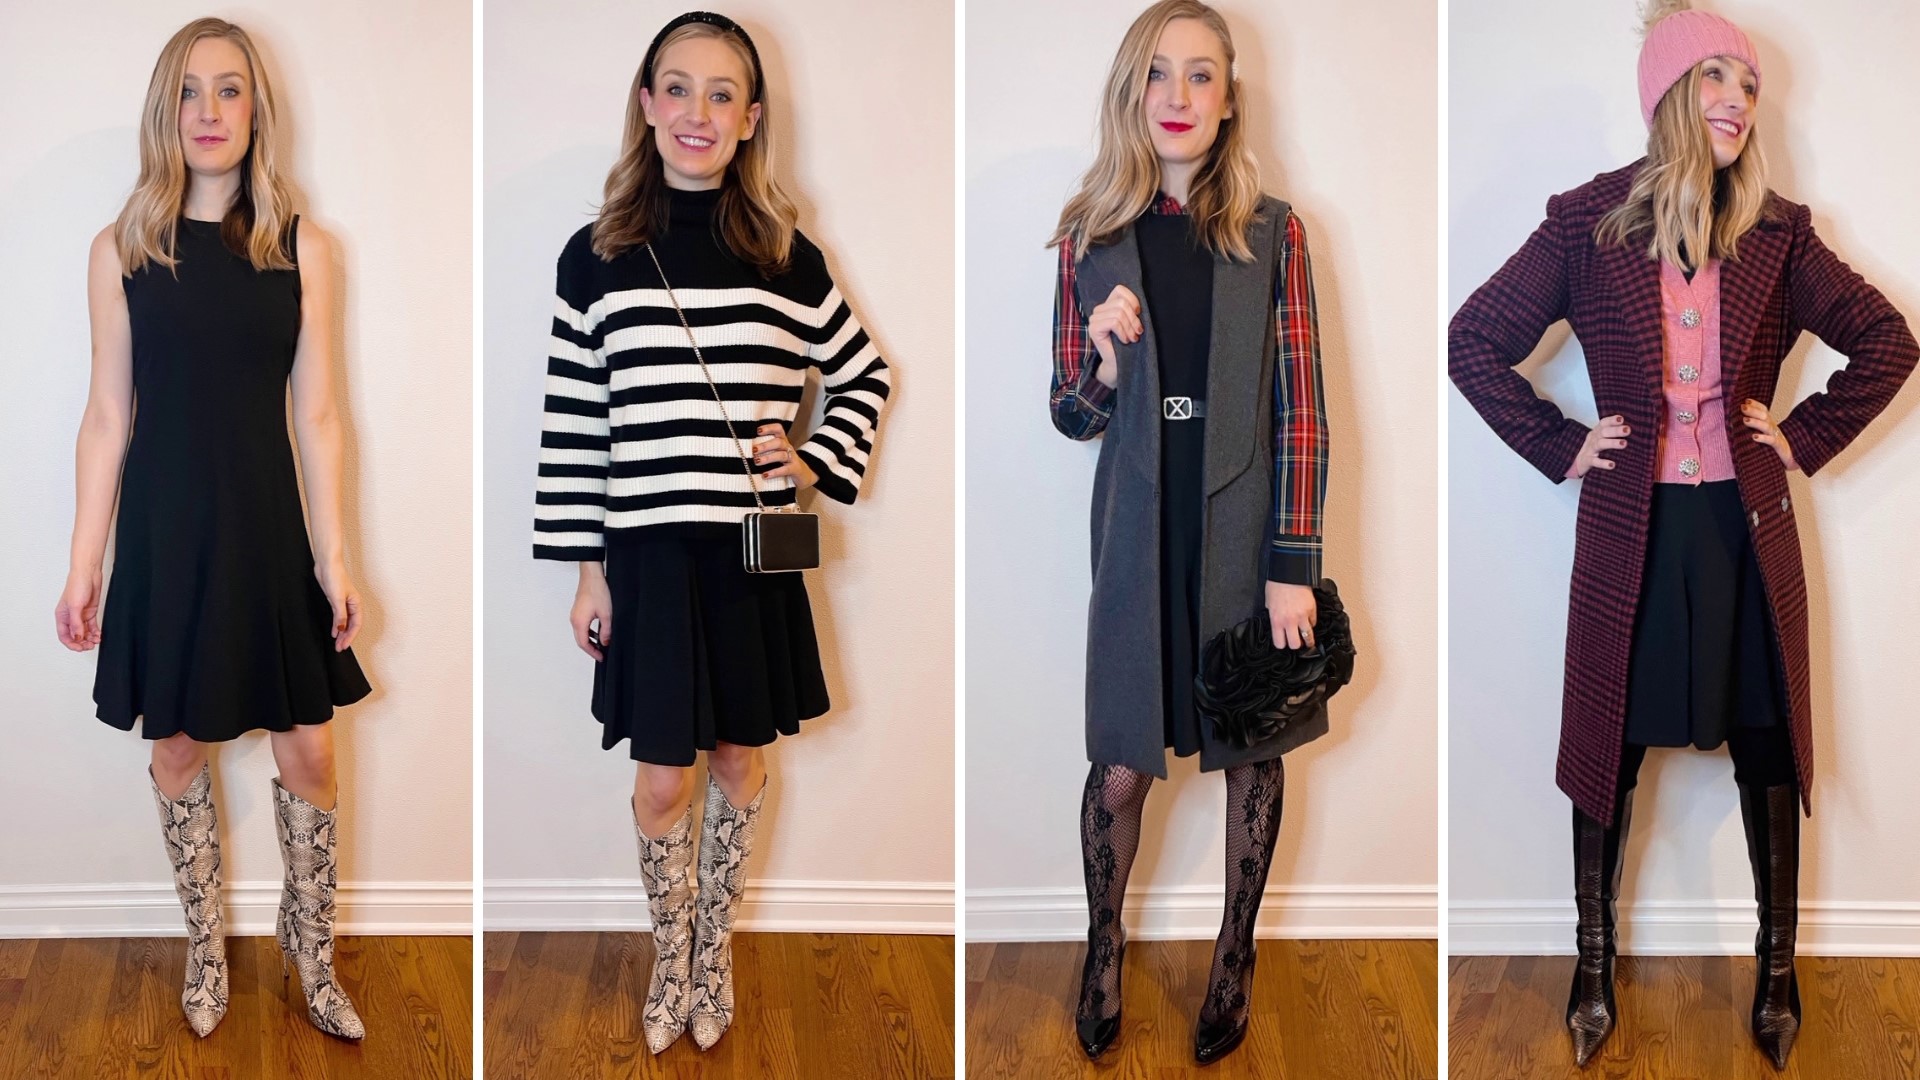 Stylist Darcy Camden shares how you can wear one dress four ways! #newdaynw